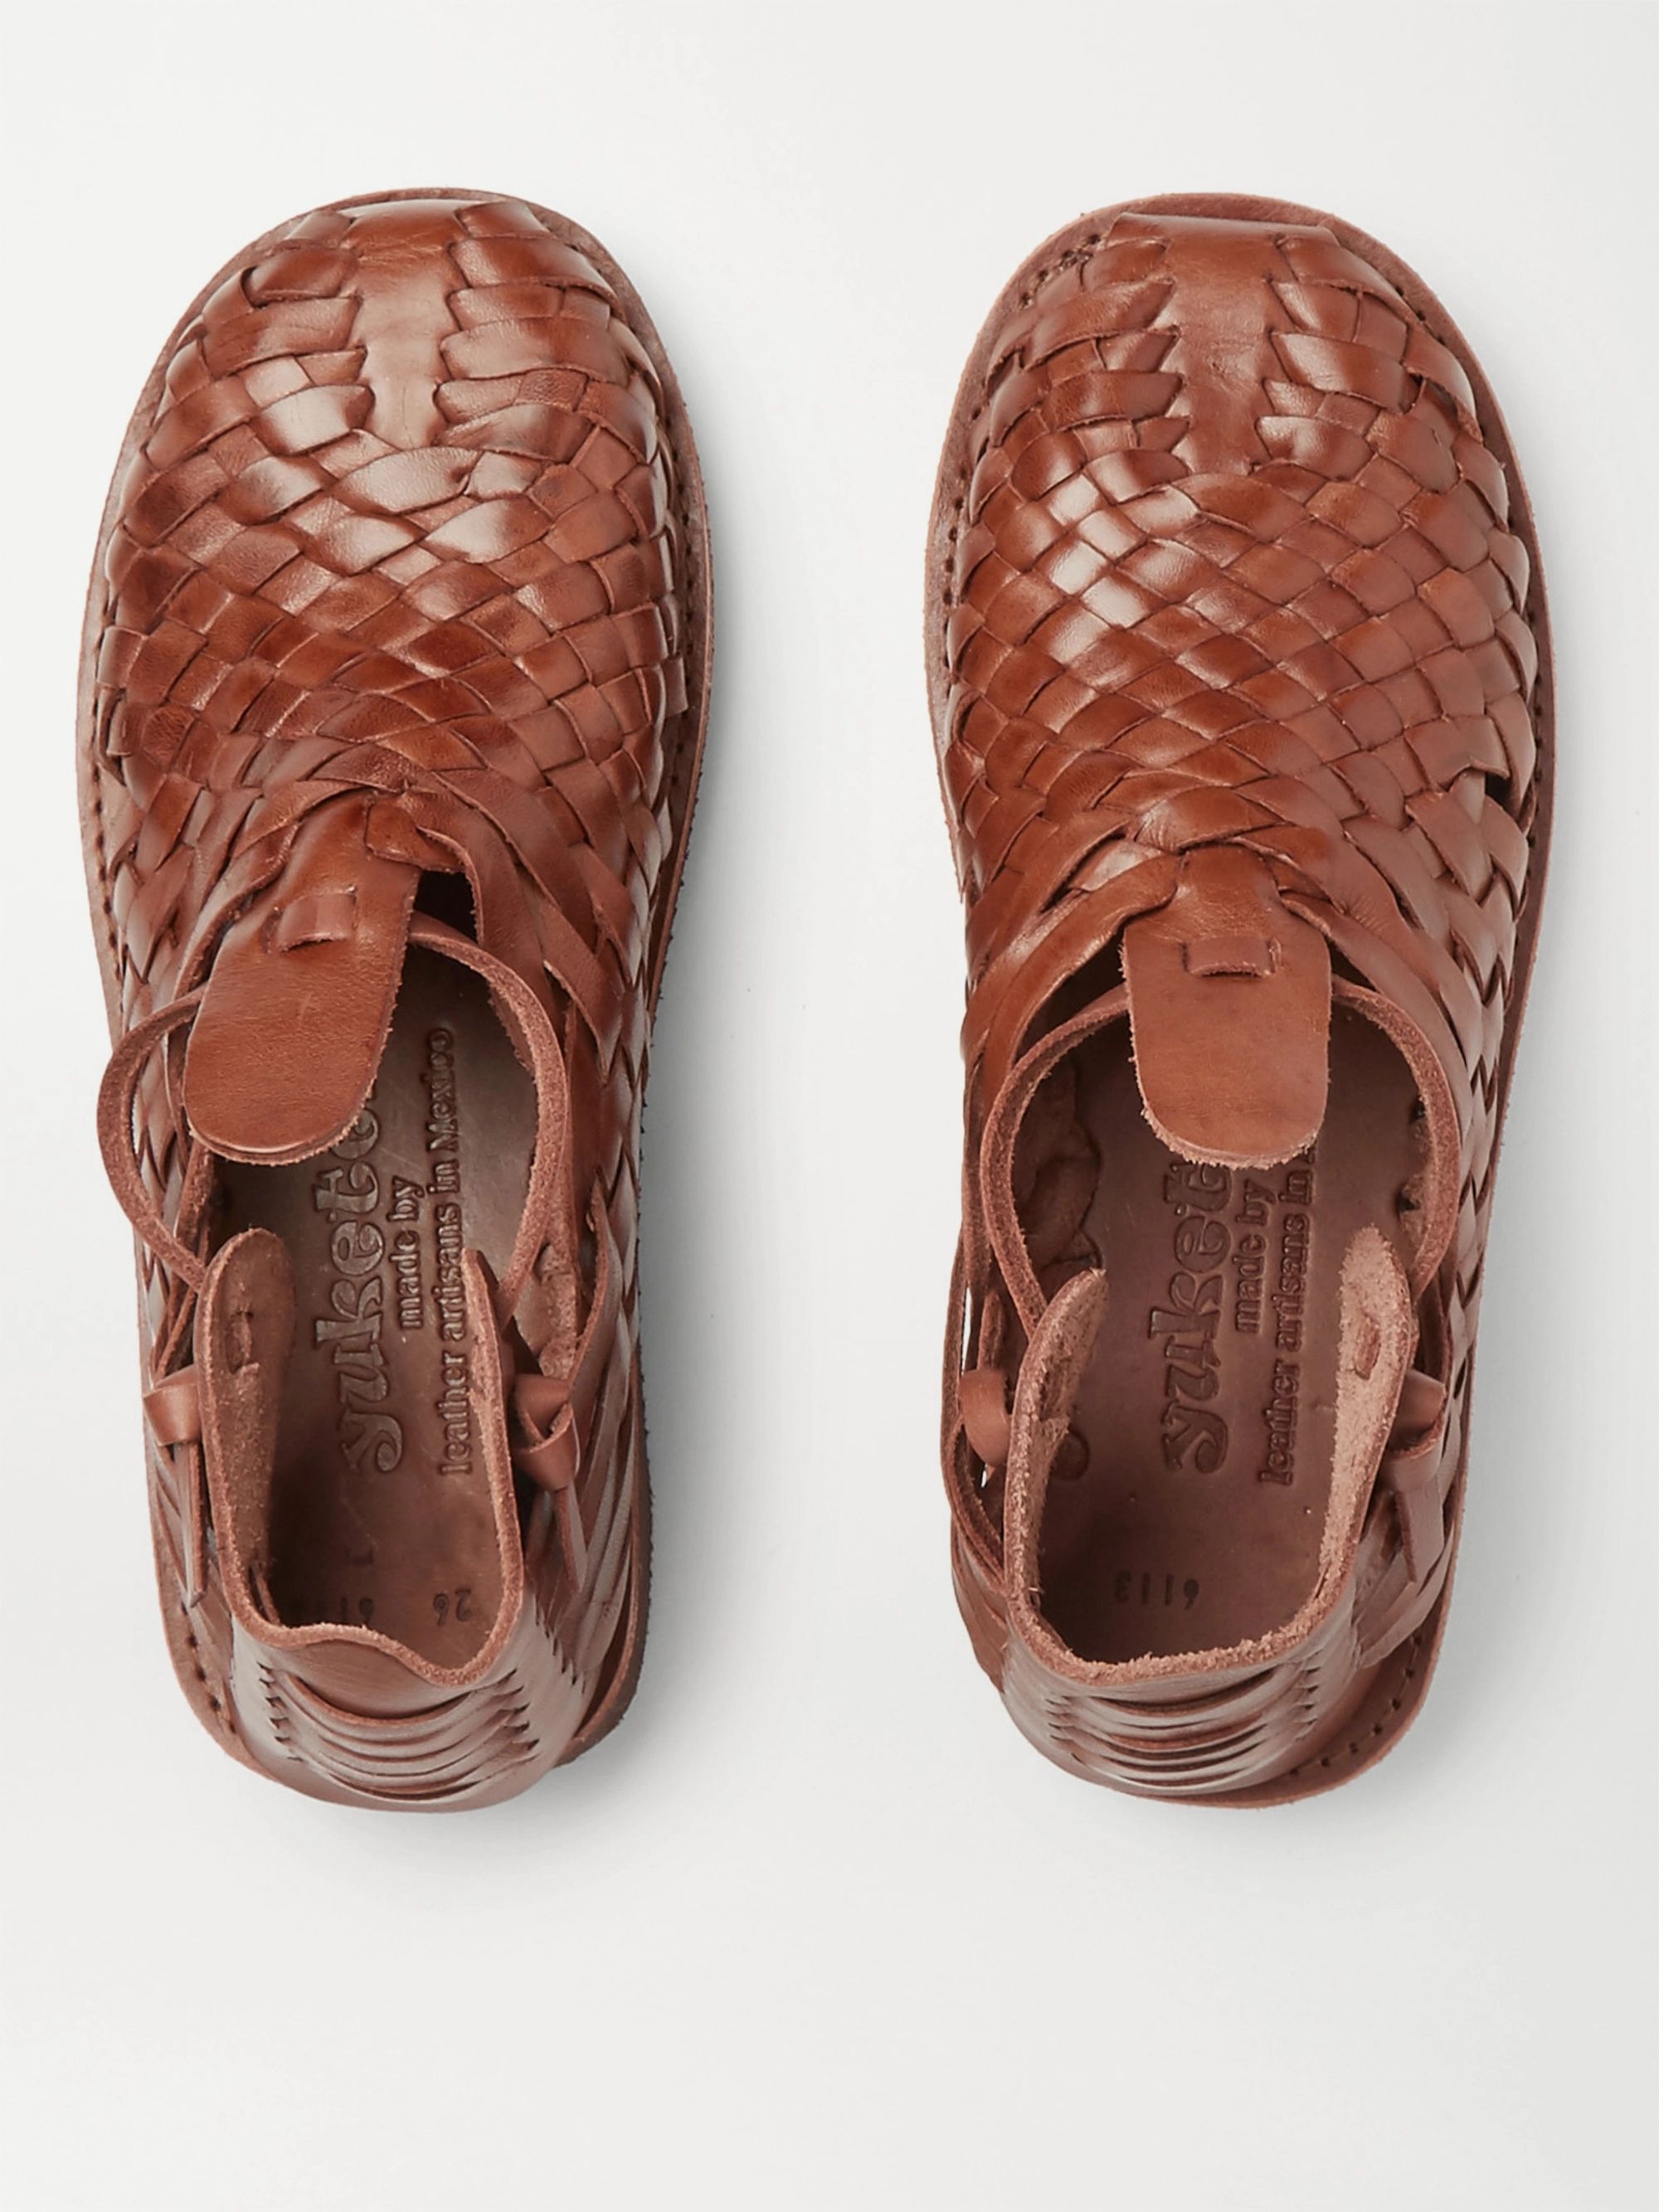 woven leather sandals huarache